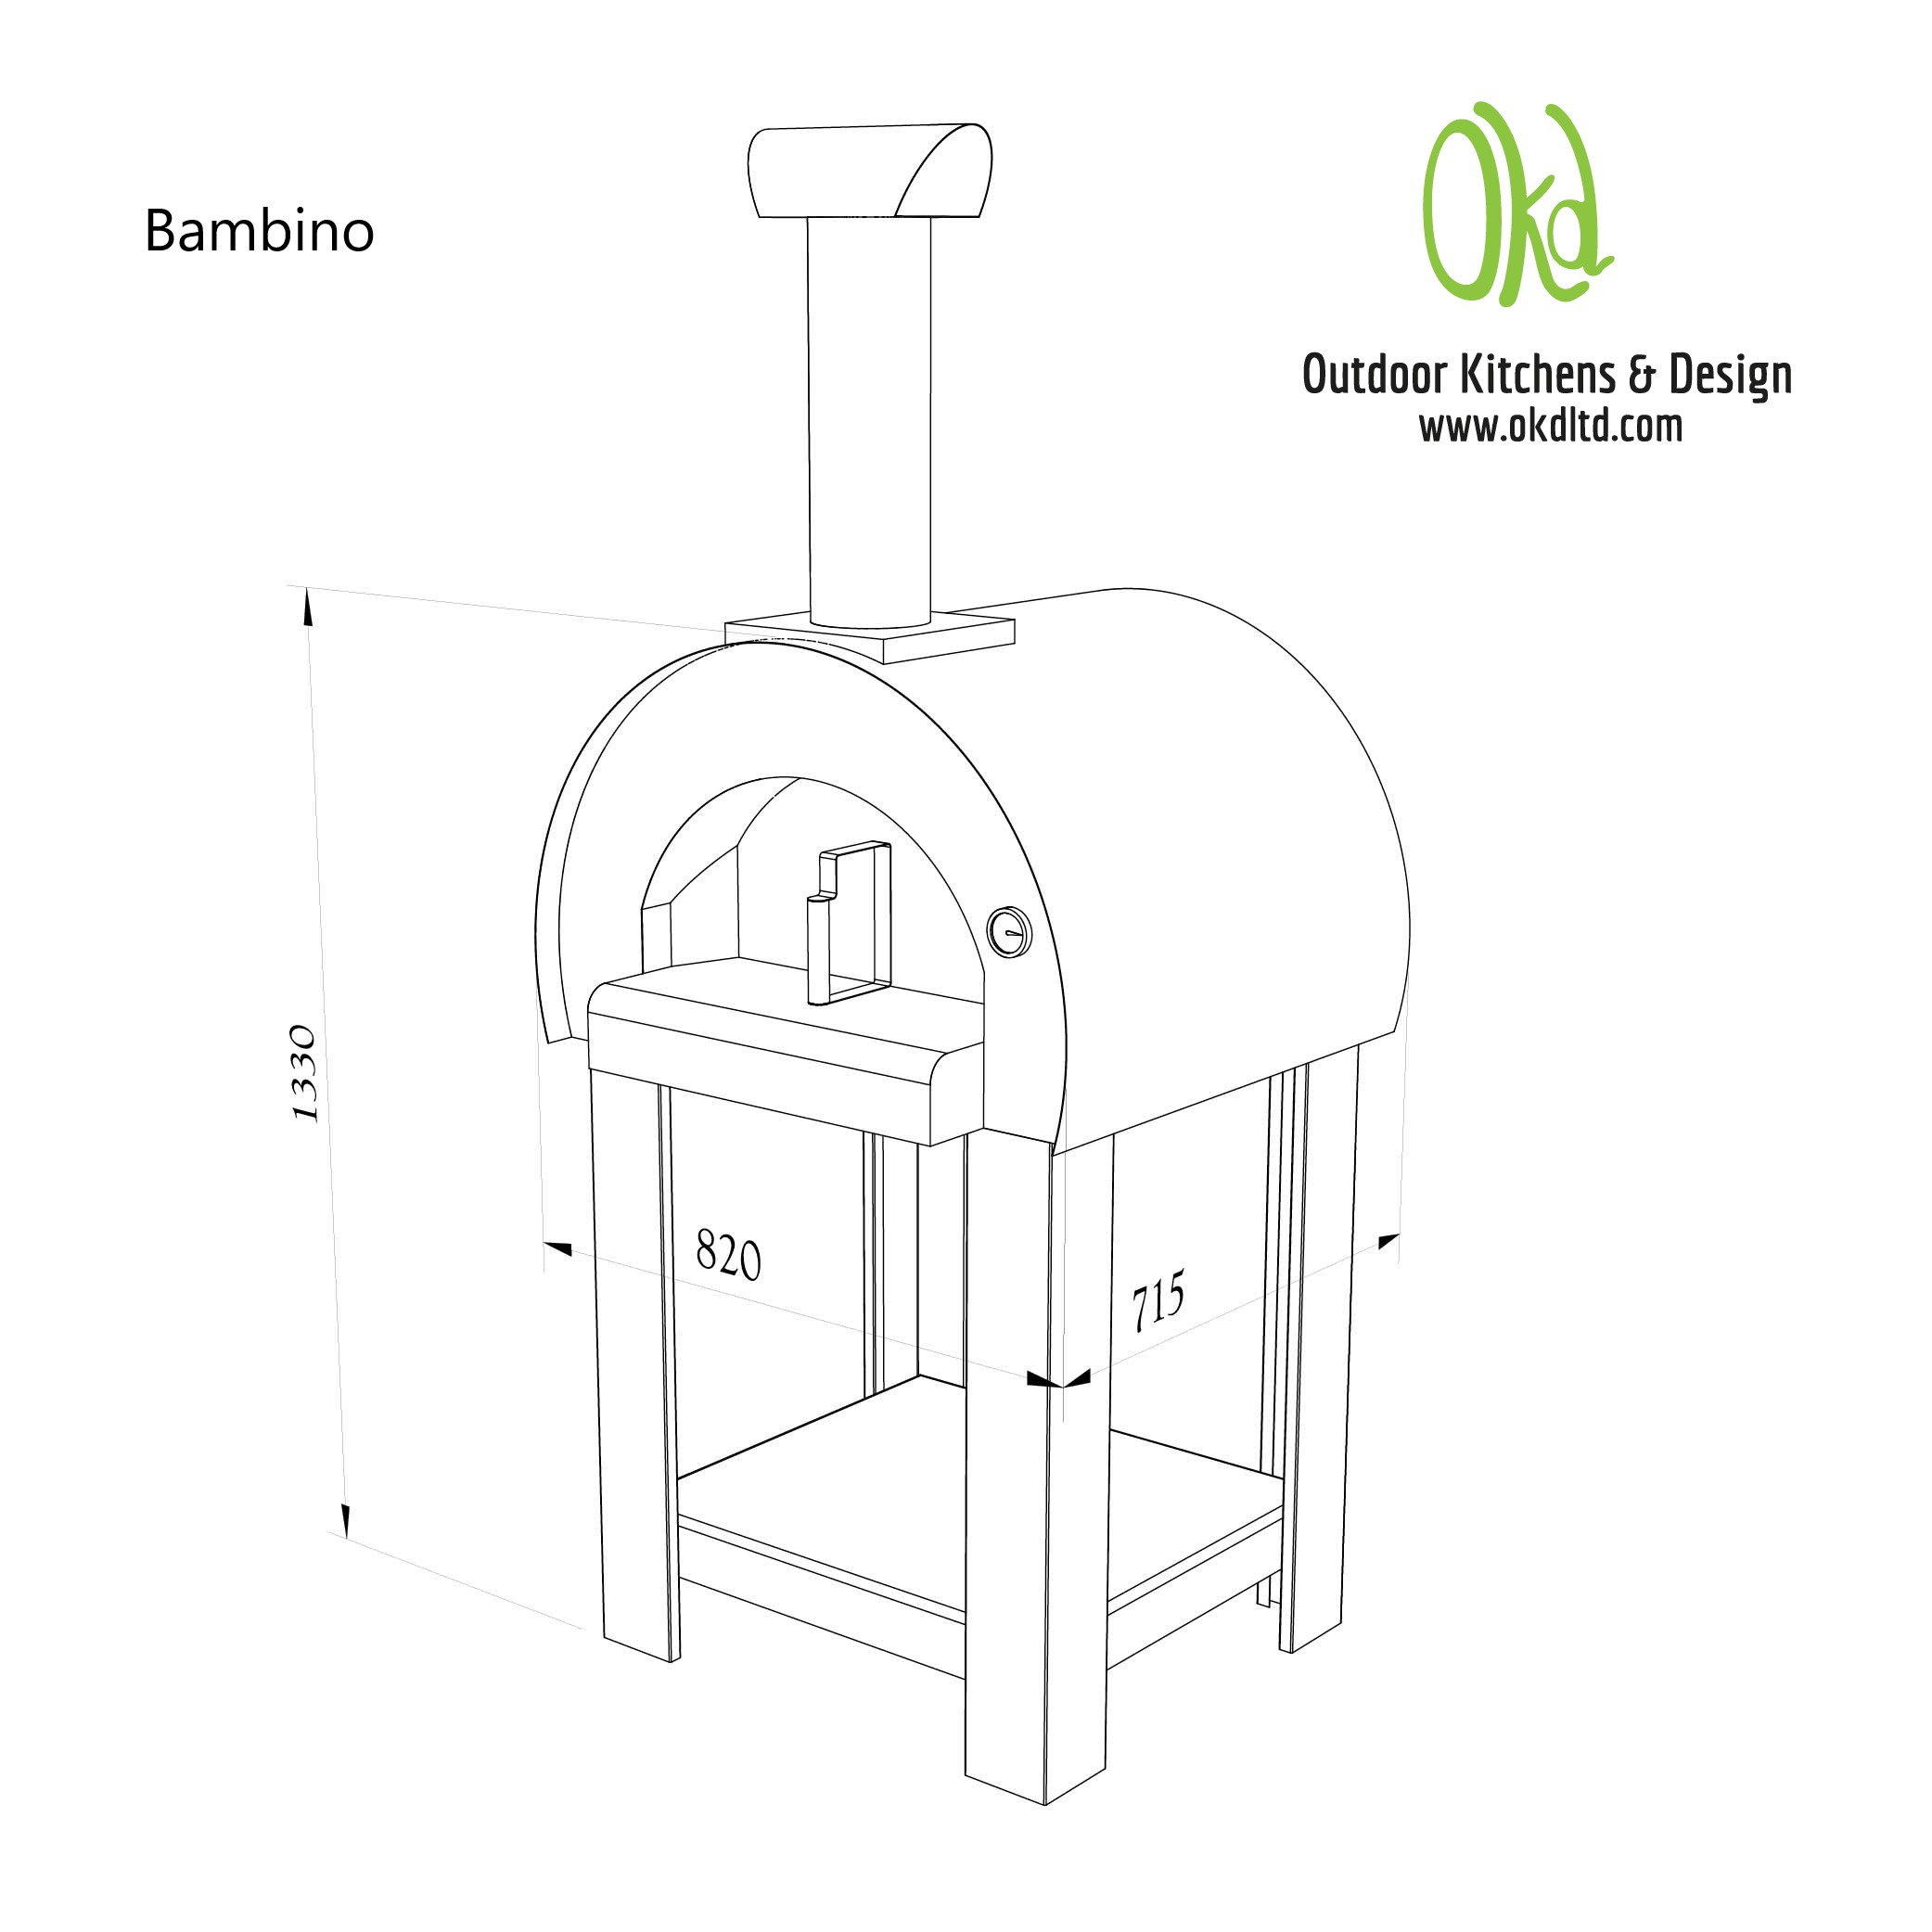 OKD Bambino Pizza Oven measurements